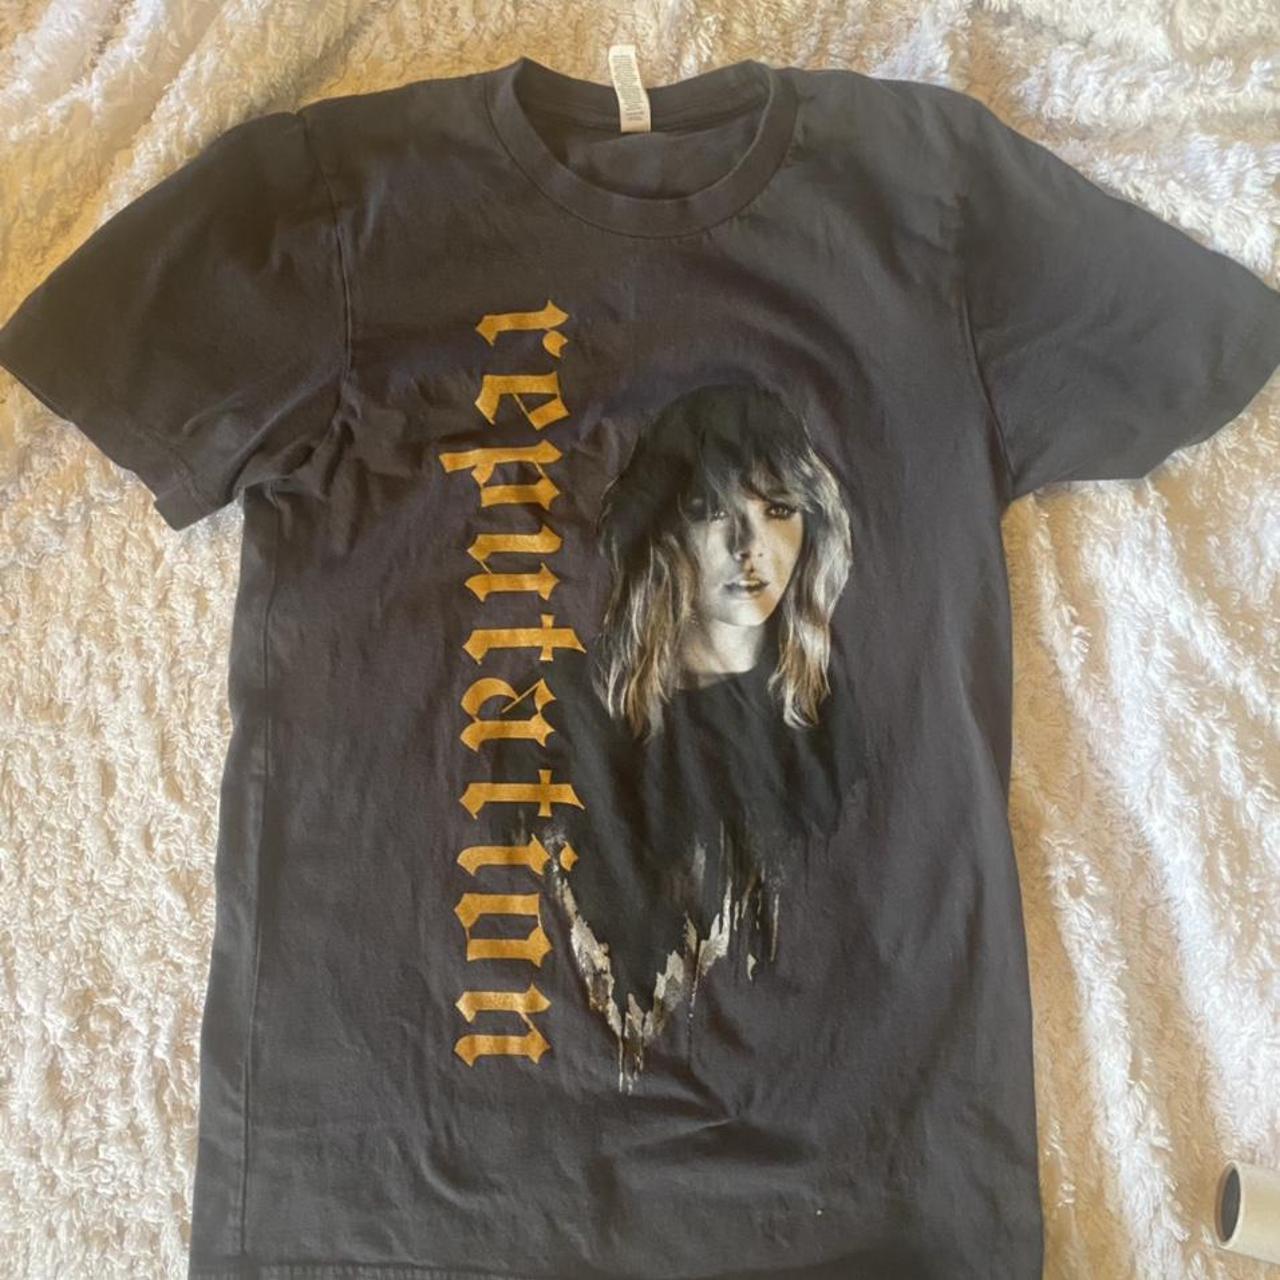 Product Image 1 - Taylor Swift Reputation tour tshirt.